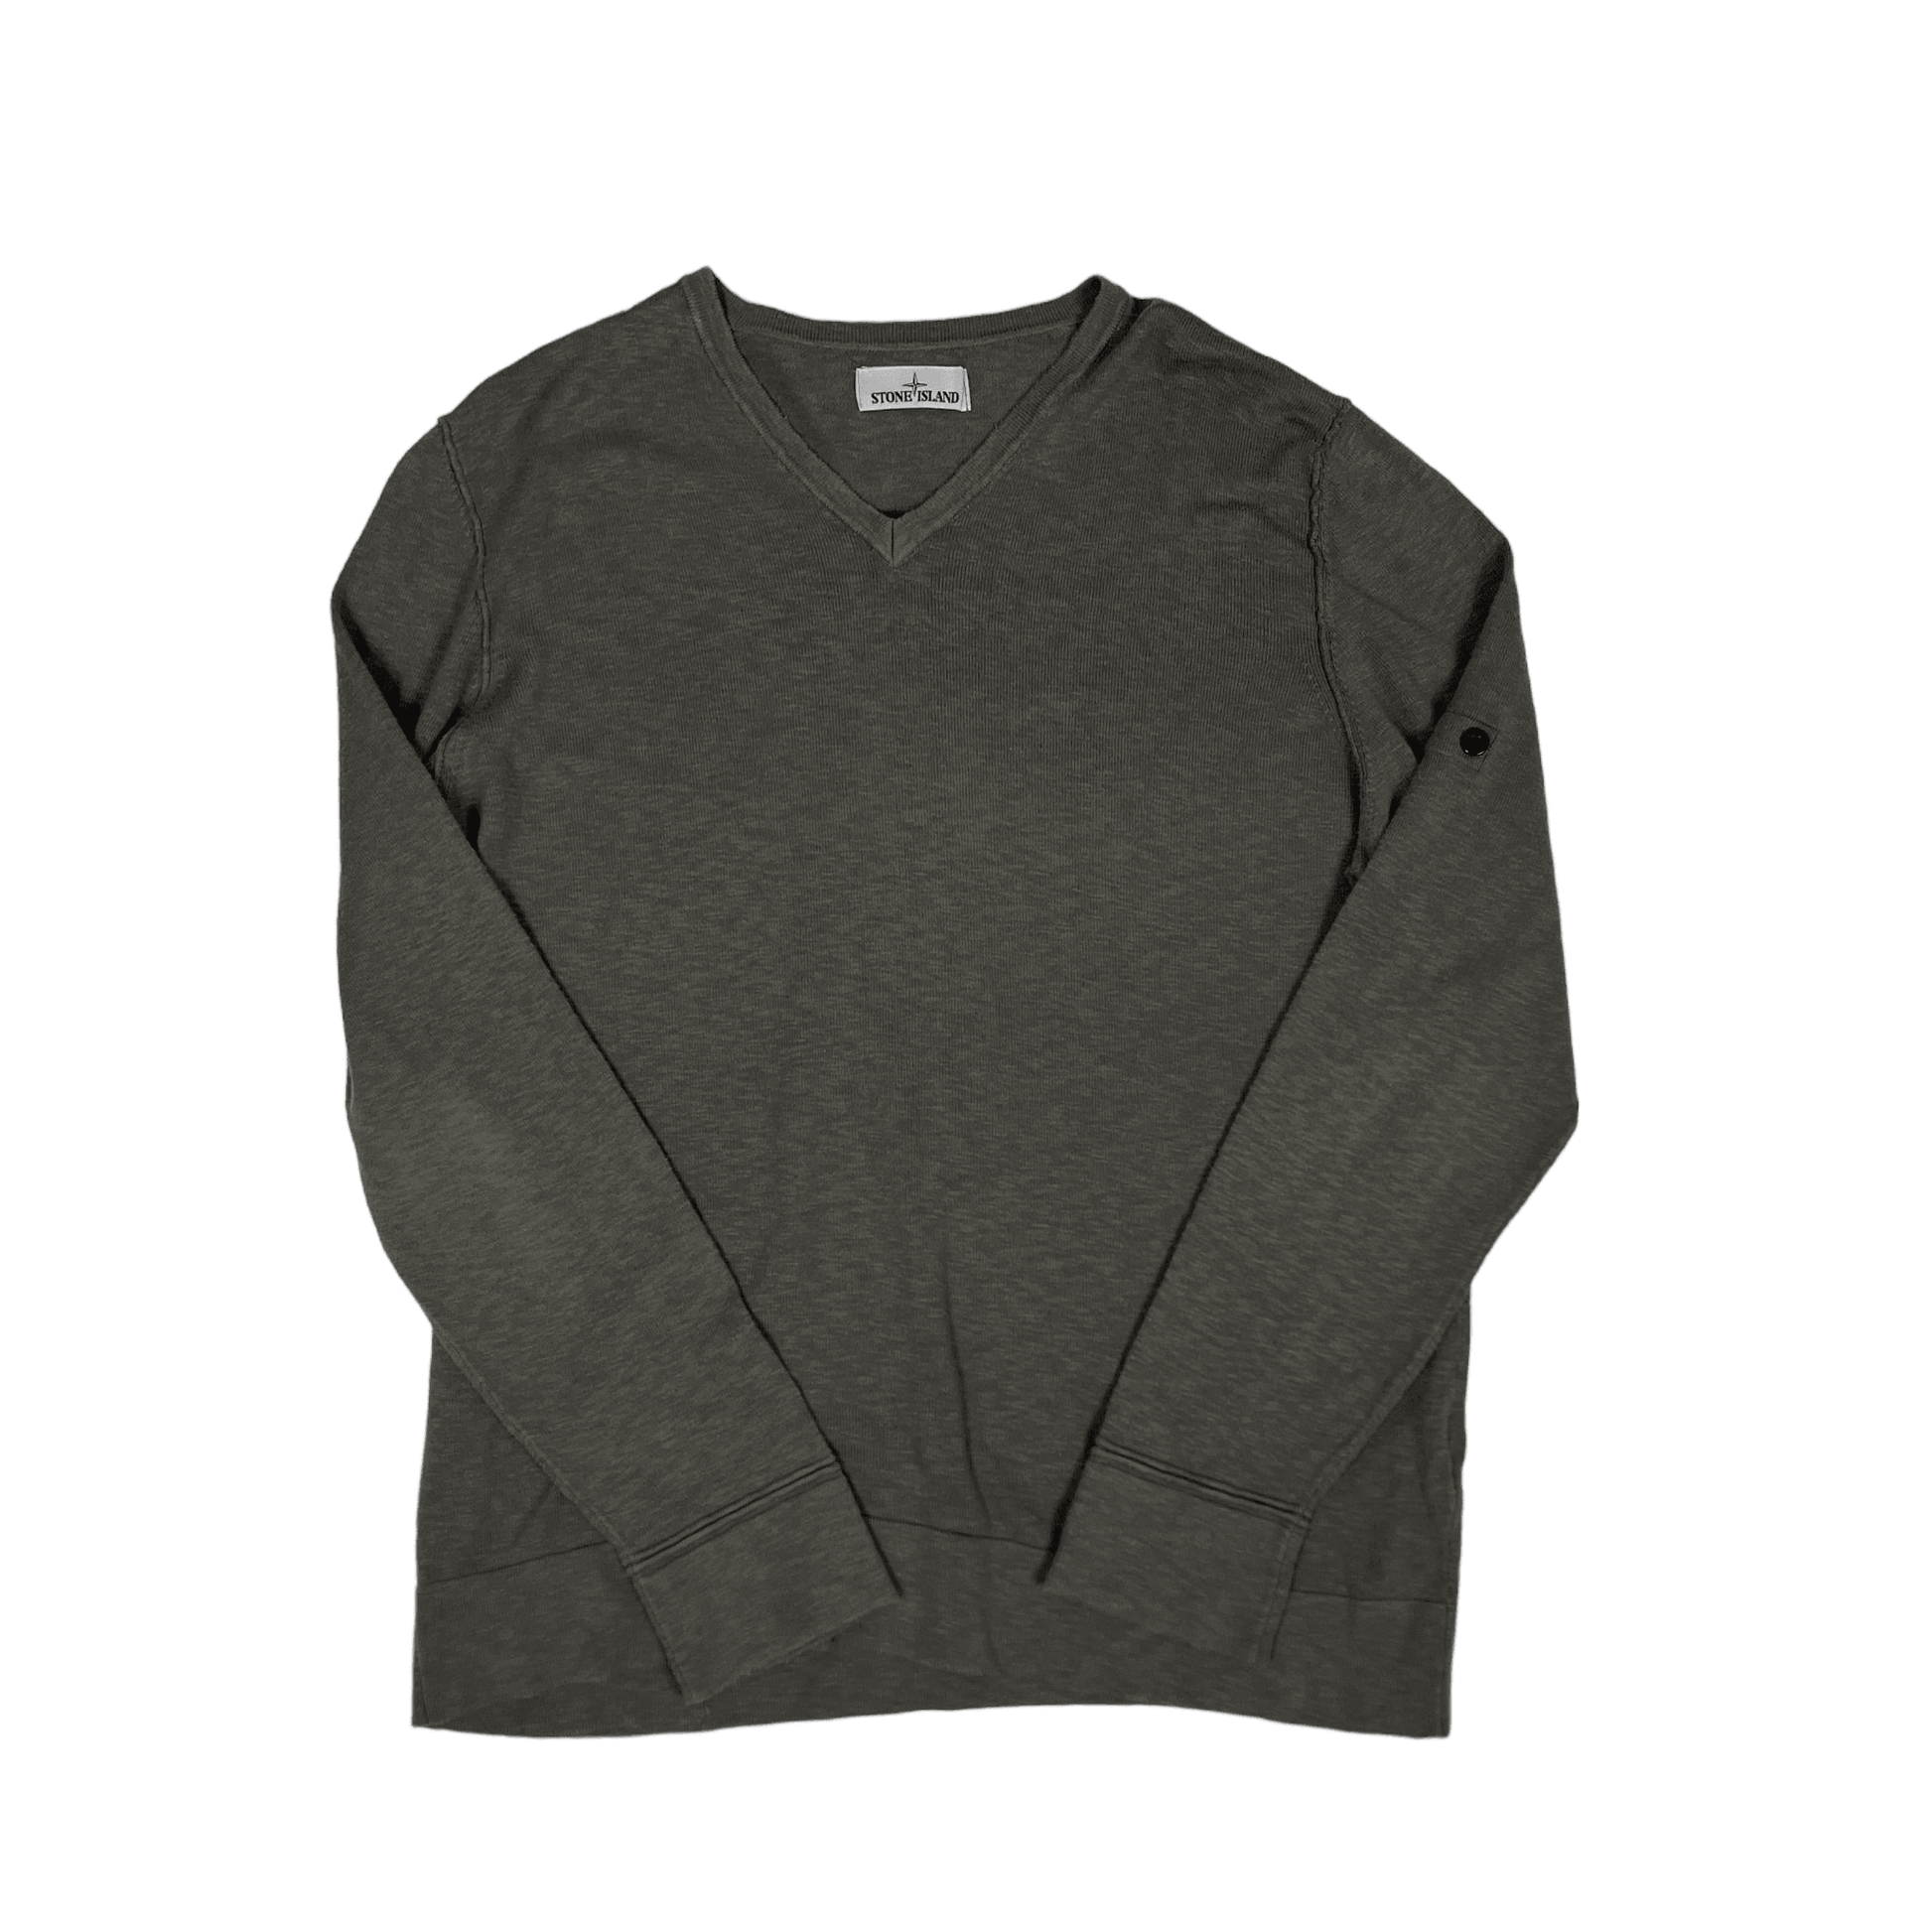 Vintage Grey Stone Island Sweatshirt - XXL (Recommended Size - Extra Large) - The Streetwear Studio